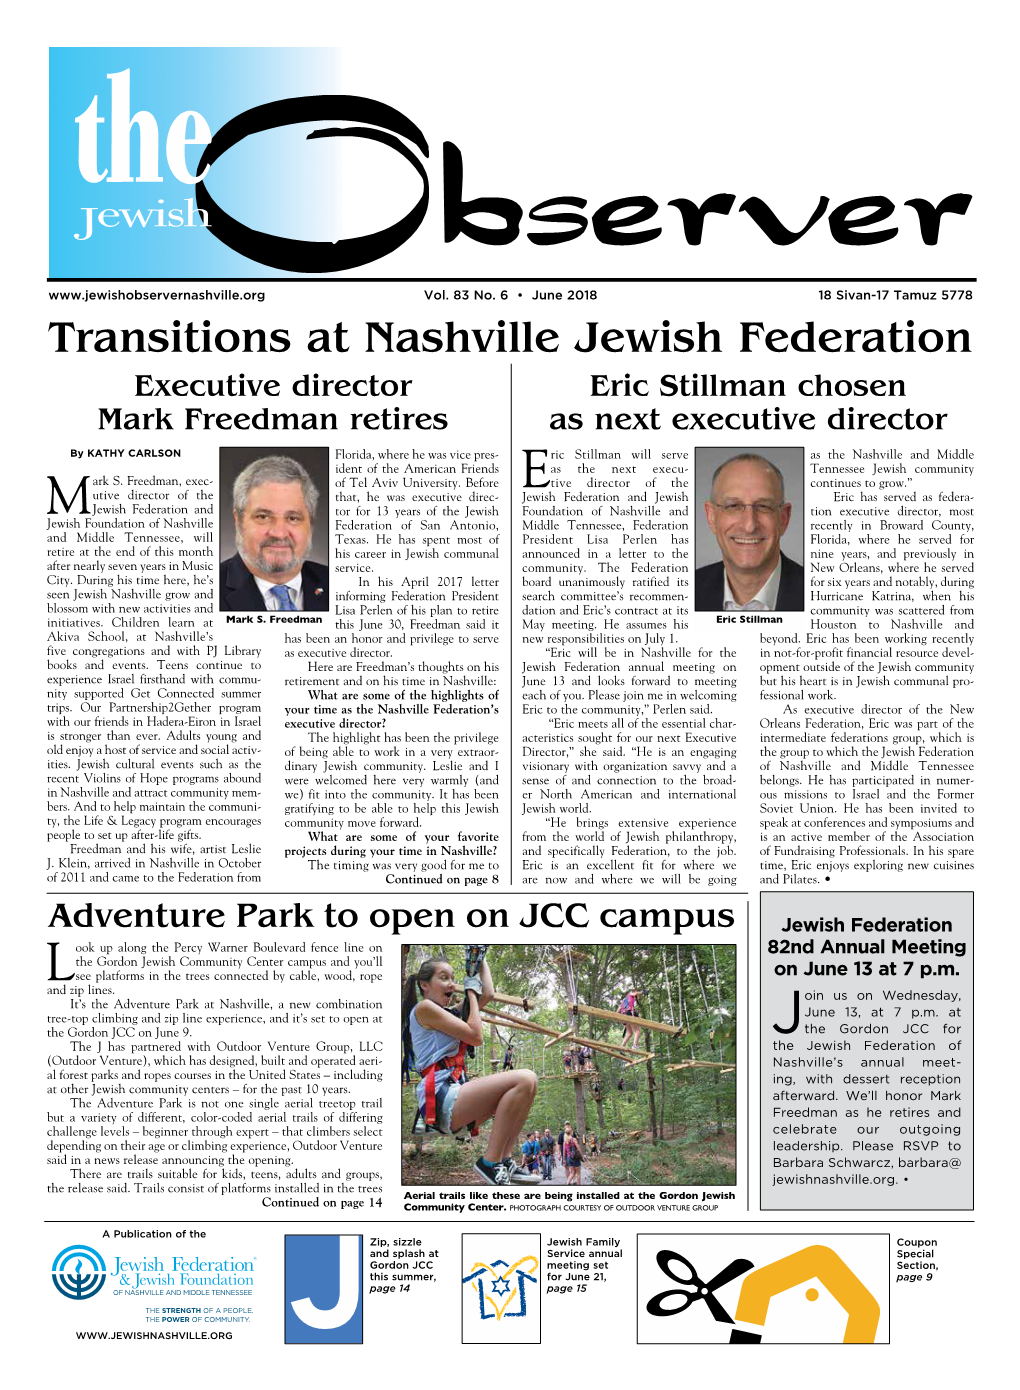 Transitions at Nashville Jewish Federation Executive Director Eric Stillman Chosen Mark Freedman Retires As Next Executive Director